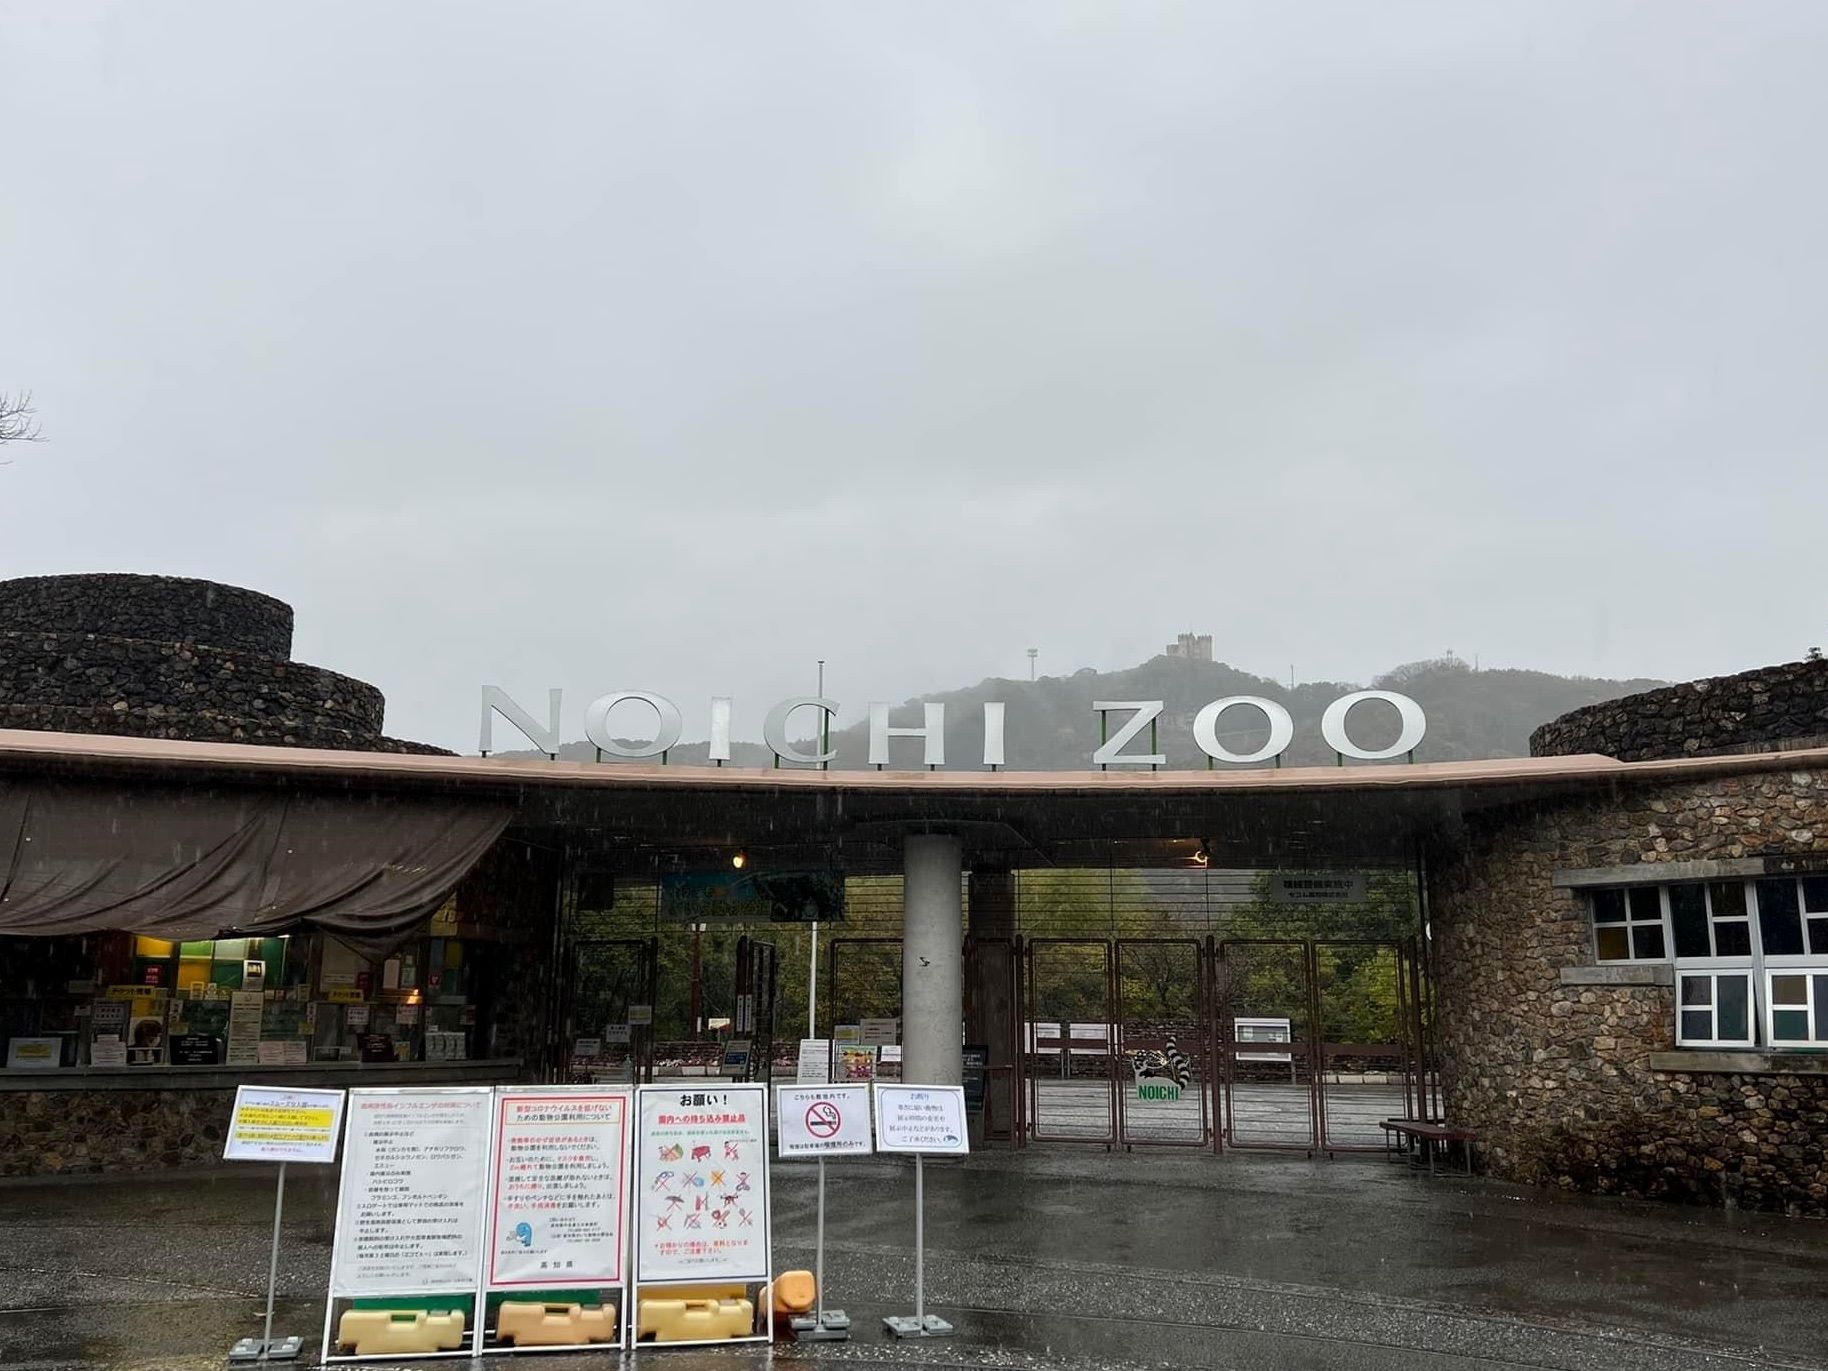 19-captivating-facts-about-noichi-zoological-park